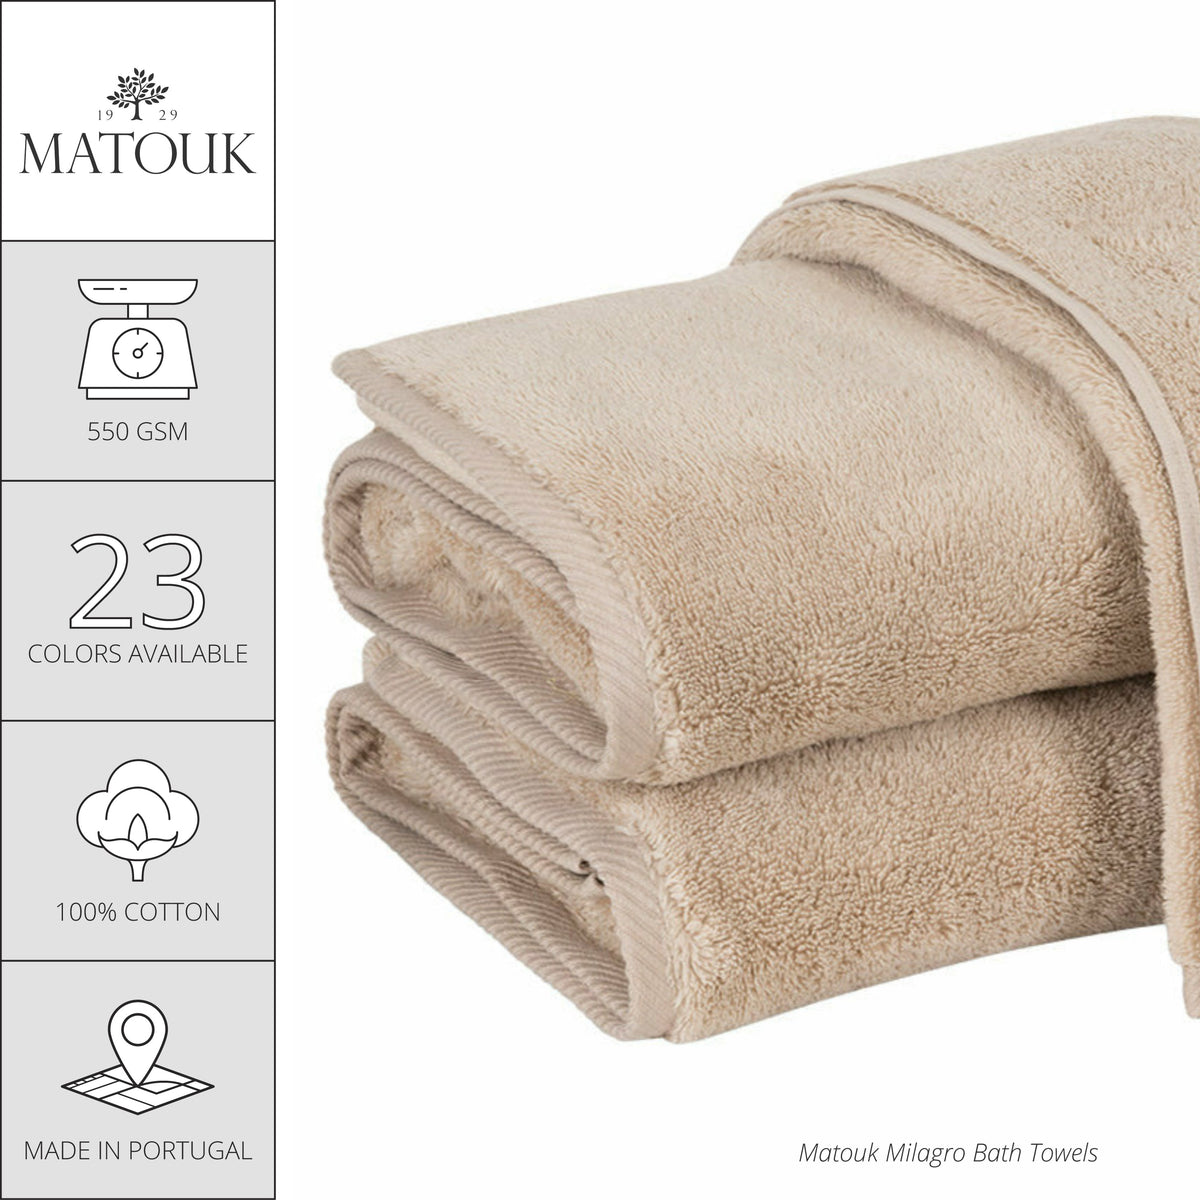 Matouk Milagro Bath Towels and Mats - Charcoal